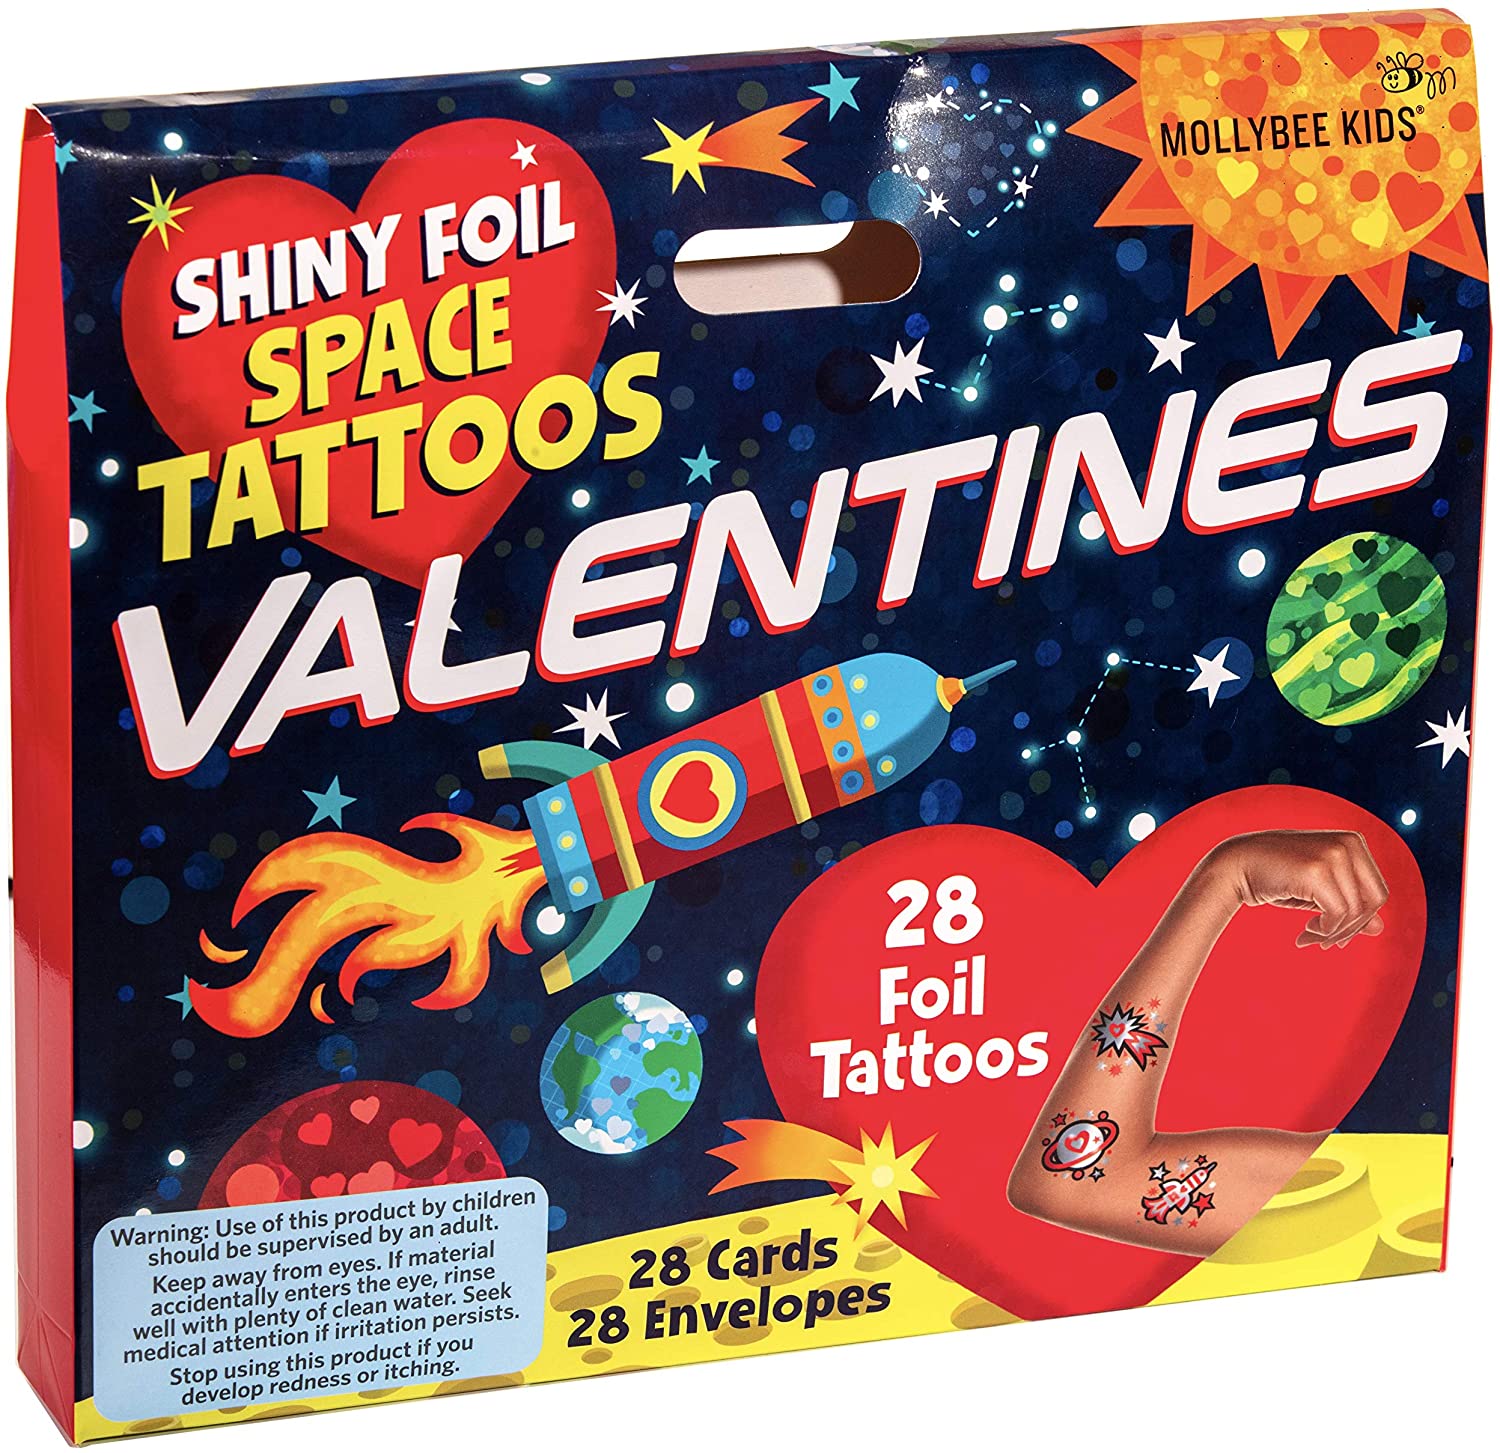 Shiny Foil Space Tattoos - Mollybee Kids